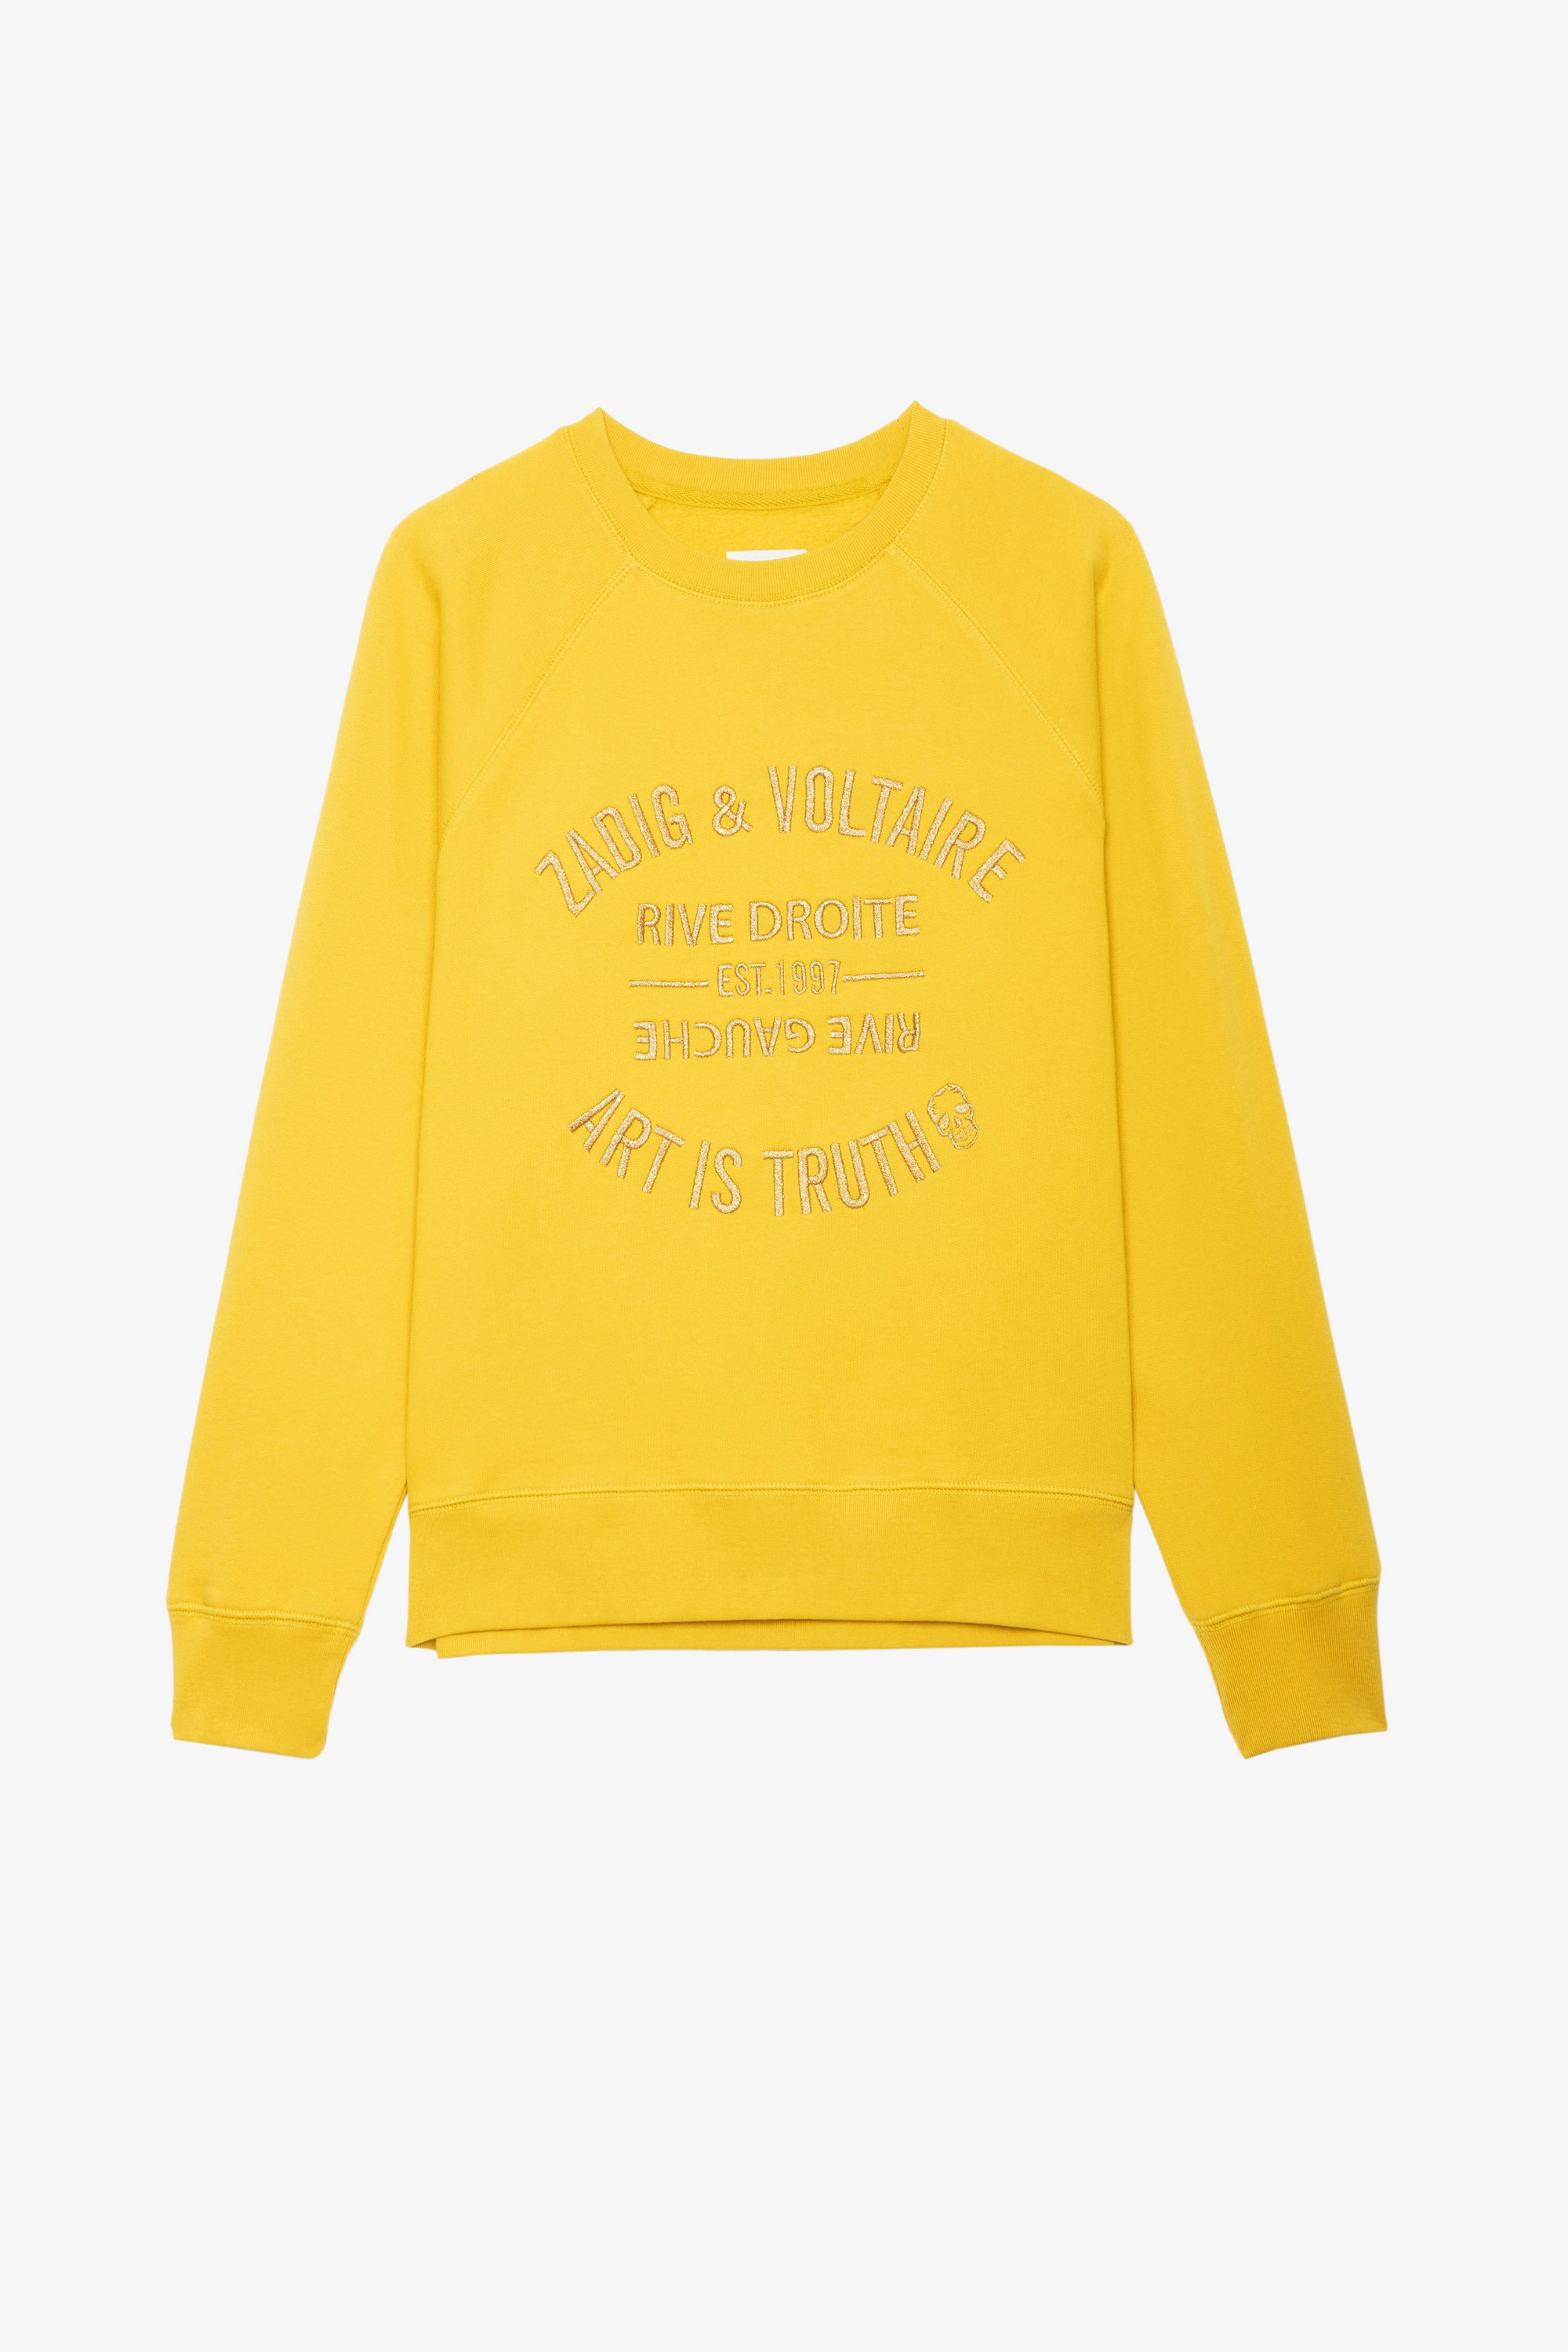 Upper Blason Embroidered Sweatshirt Women’s yellow cotton sweatshirt with badge embroidery